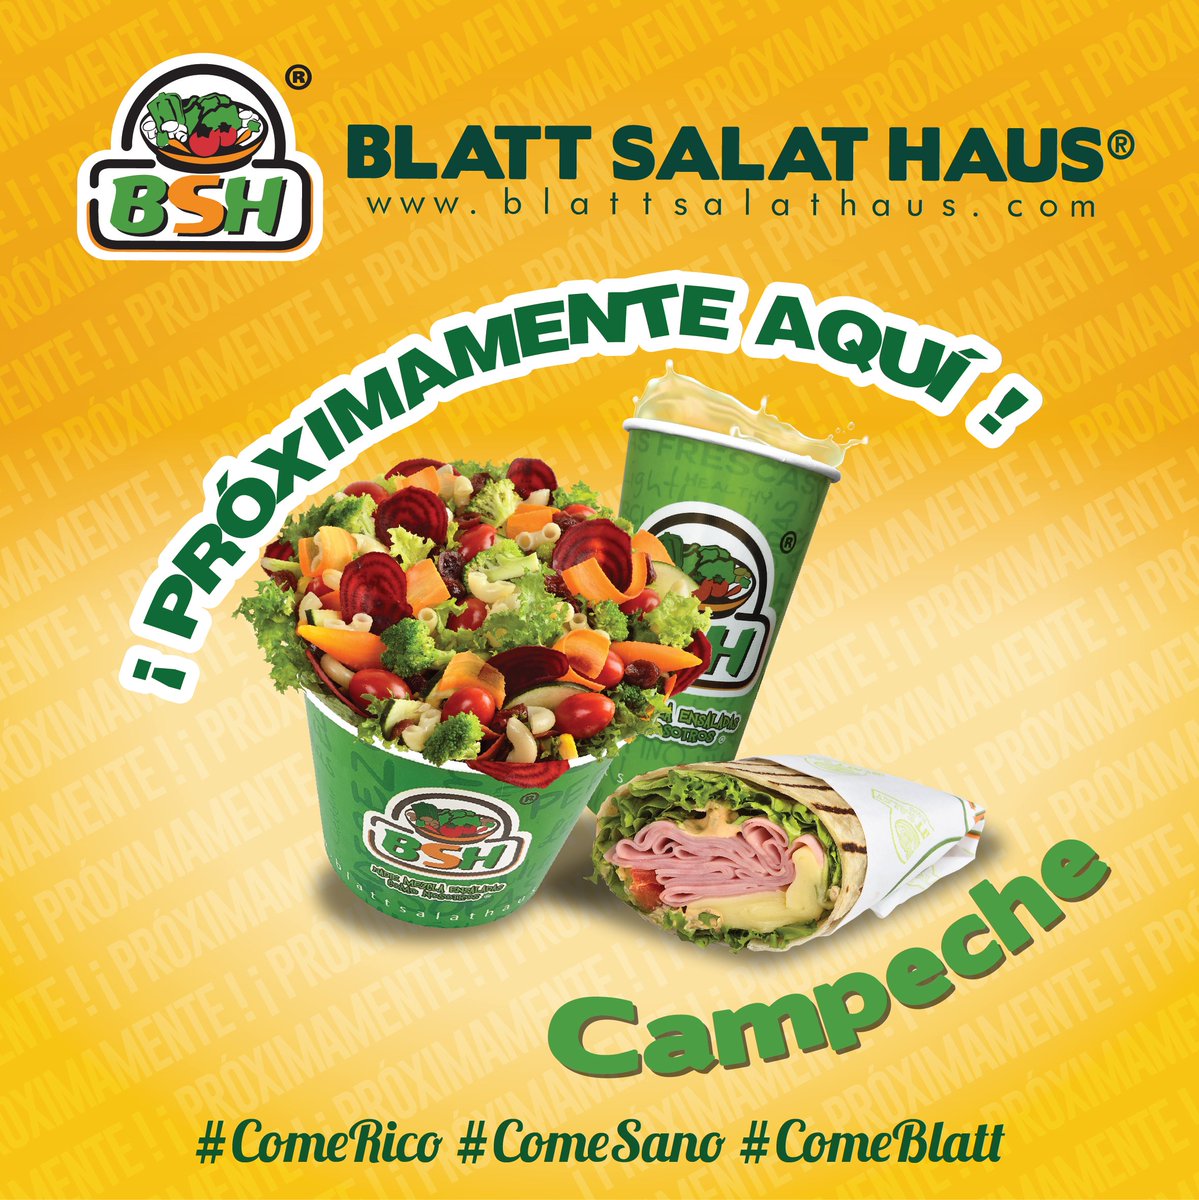 Blatt Salat Haus Proximamente En Campeche Esperalo Comerico Comesano Comeblatt